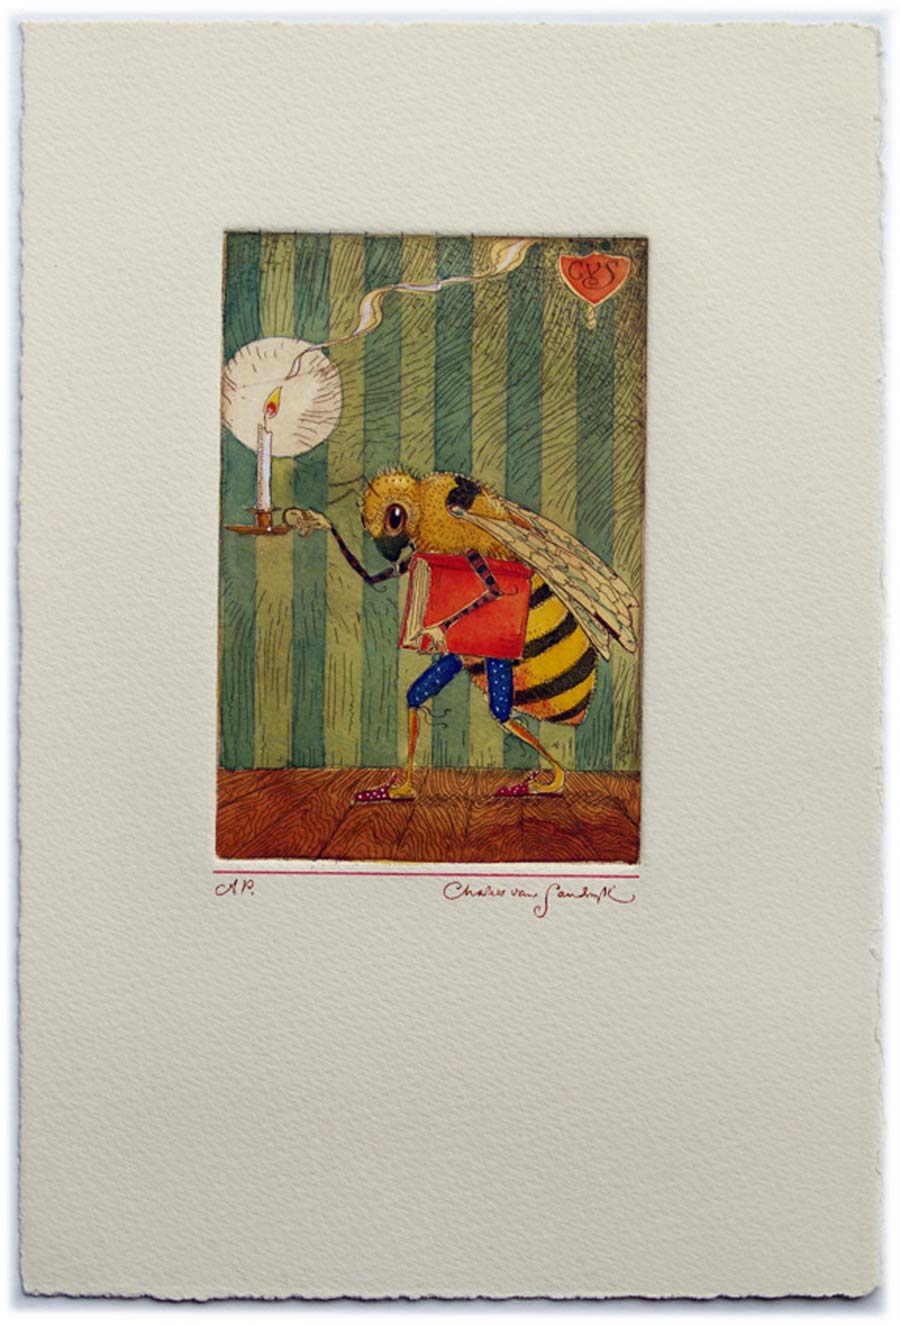 Bee Book and Candle, painted etching (Charles van Sandwyk)